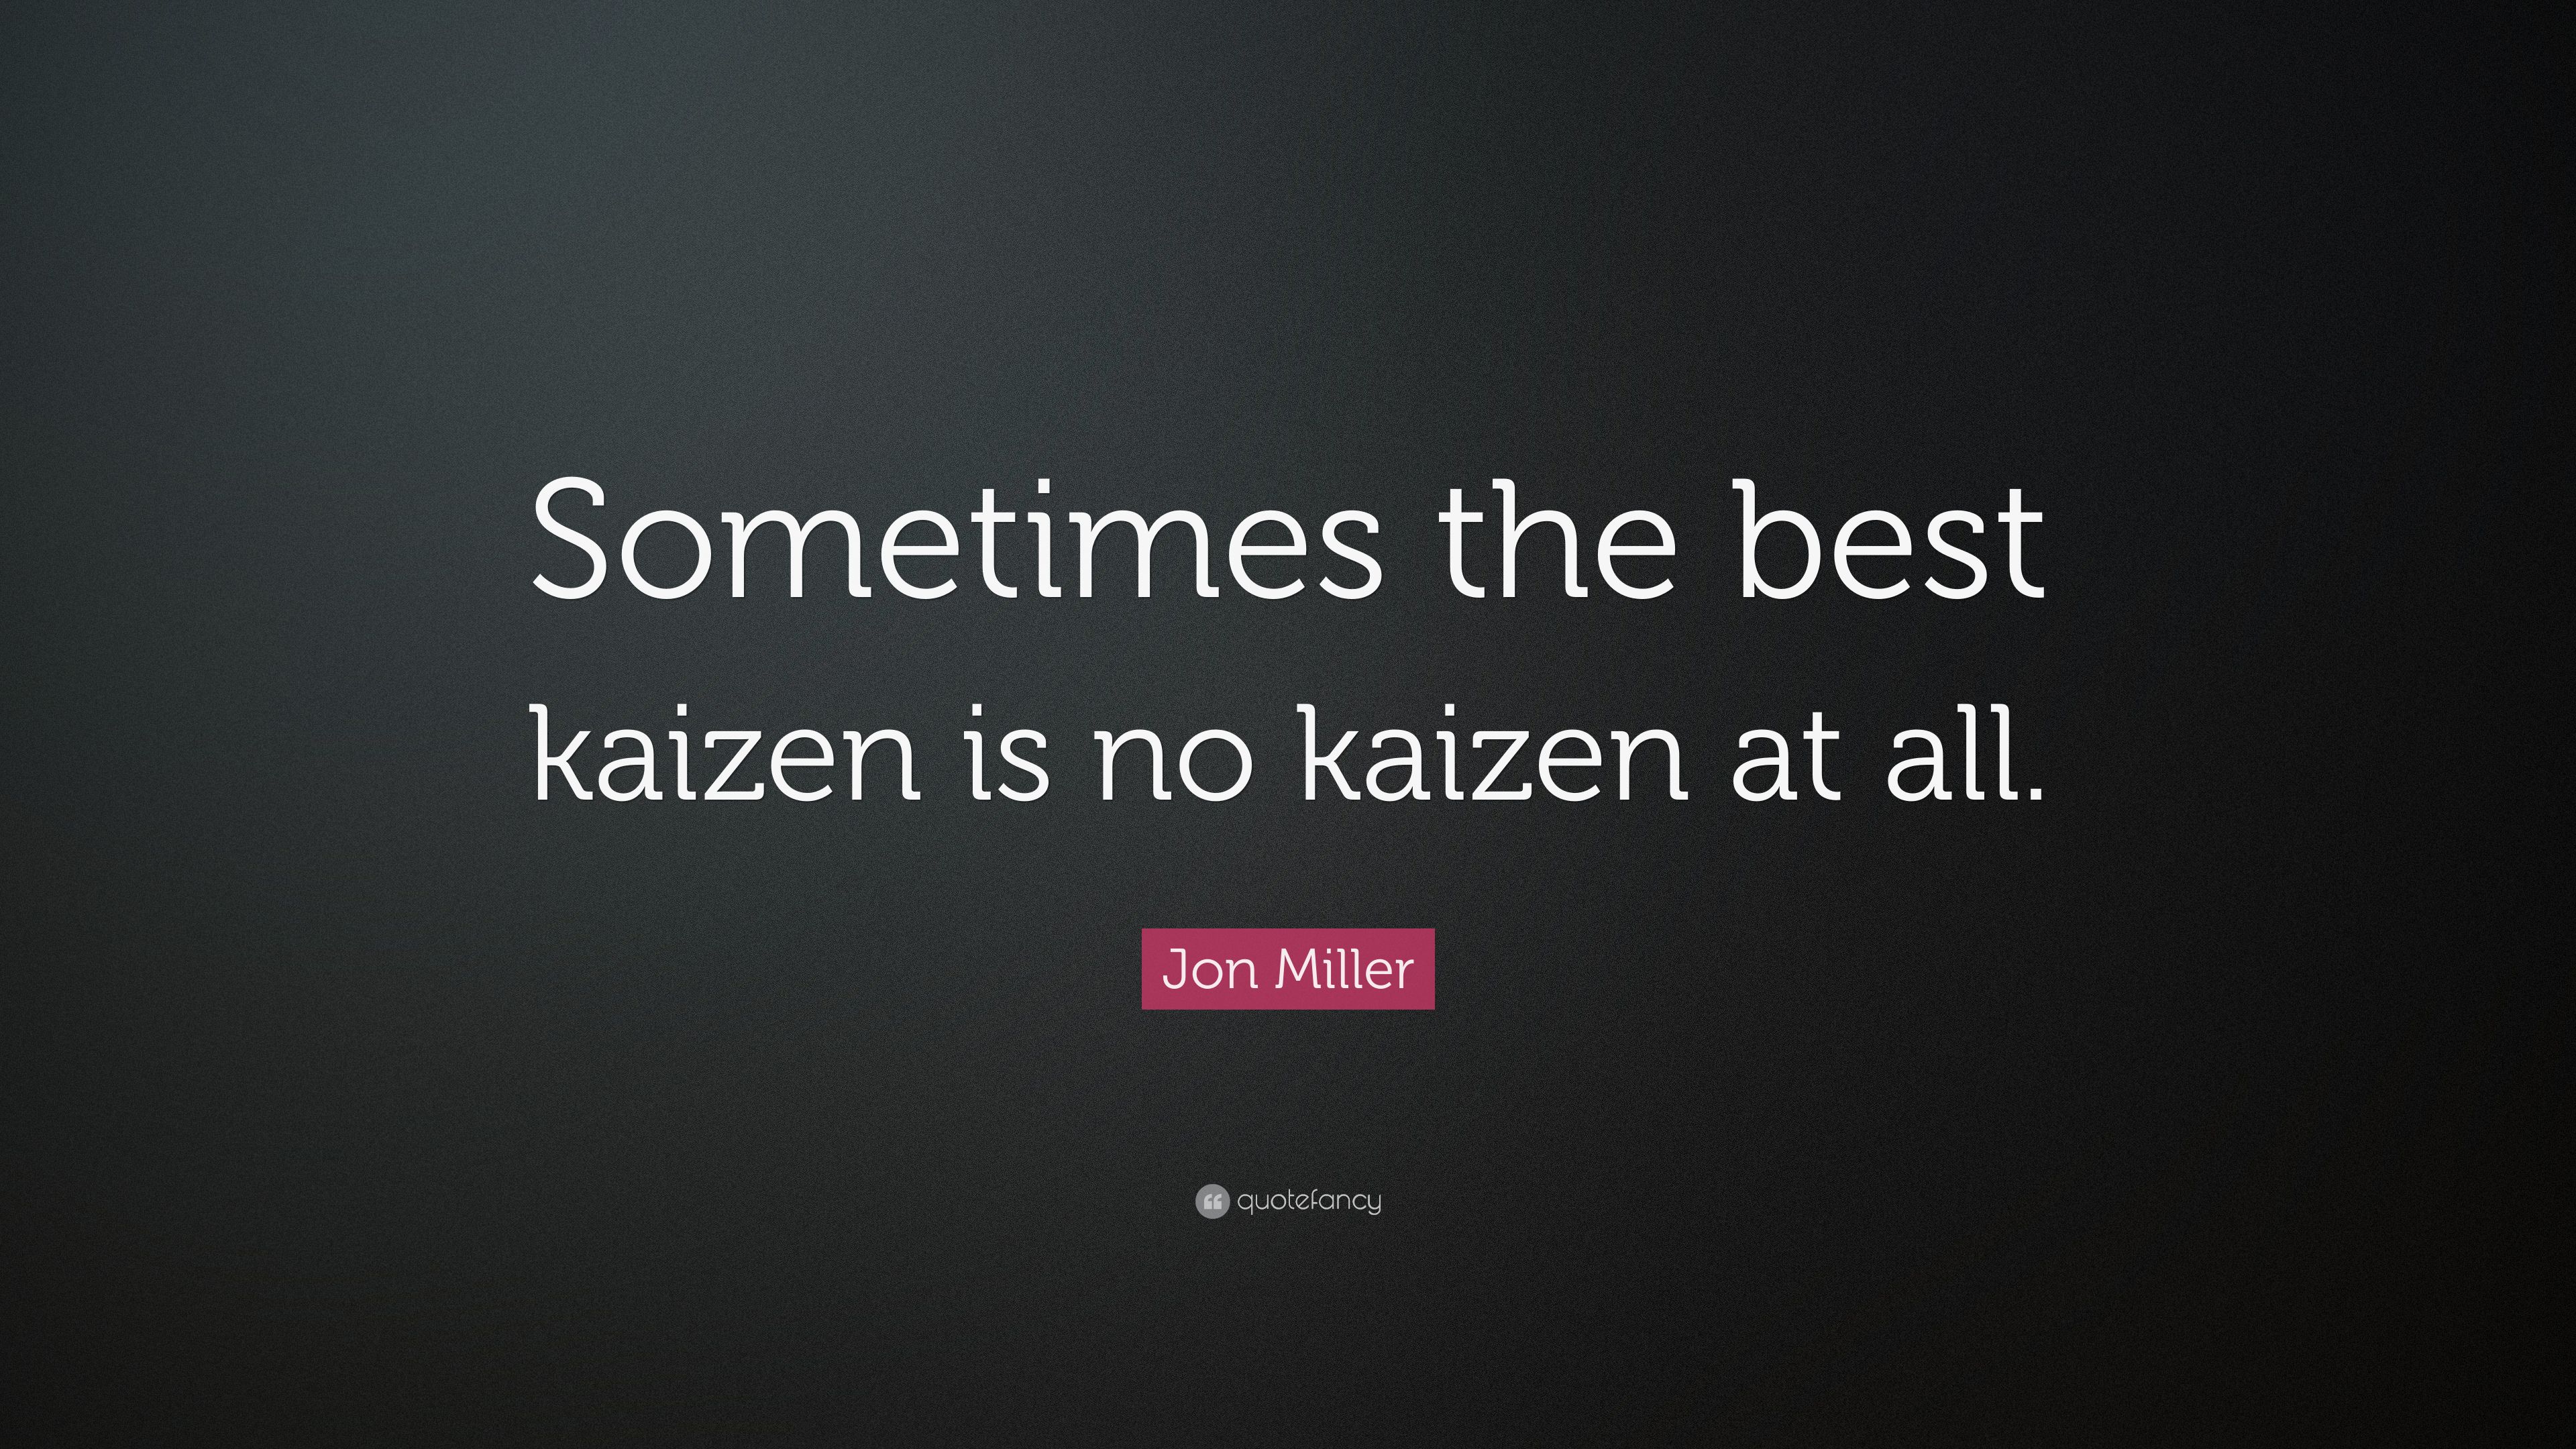 Jon Miller Quote: “Sometimes the best kaizen is no kaizen at all.” (7 wallpaper)